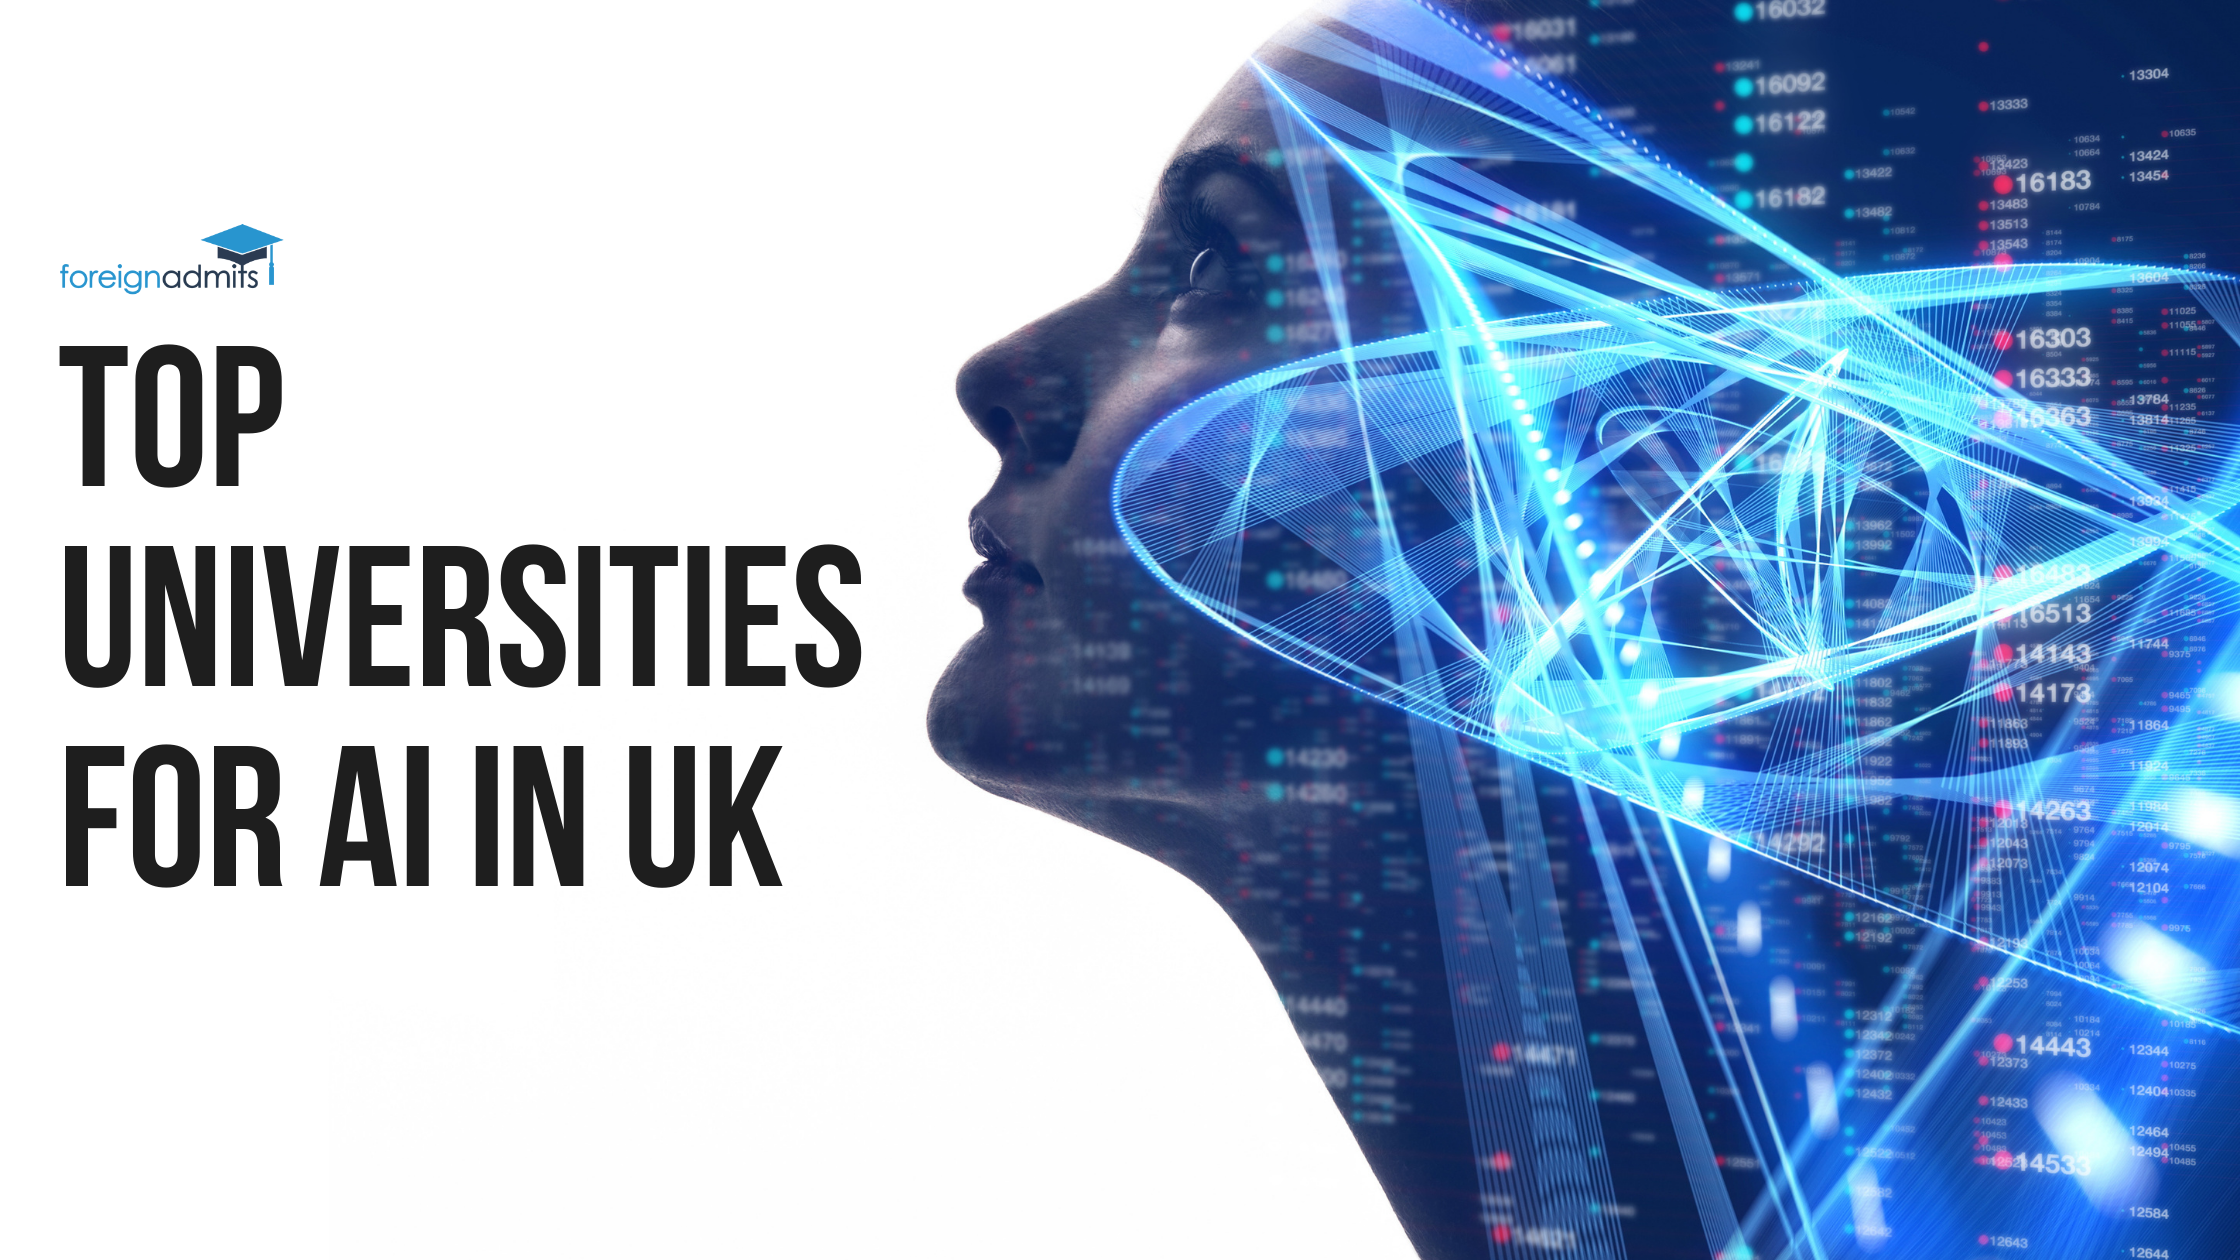 Top Universities for AI in UK